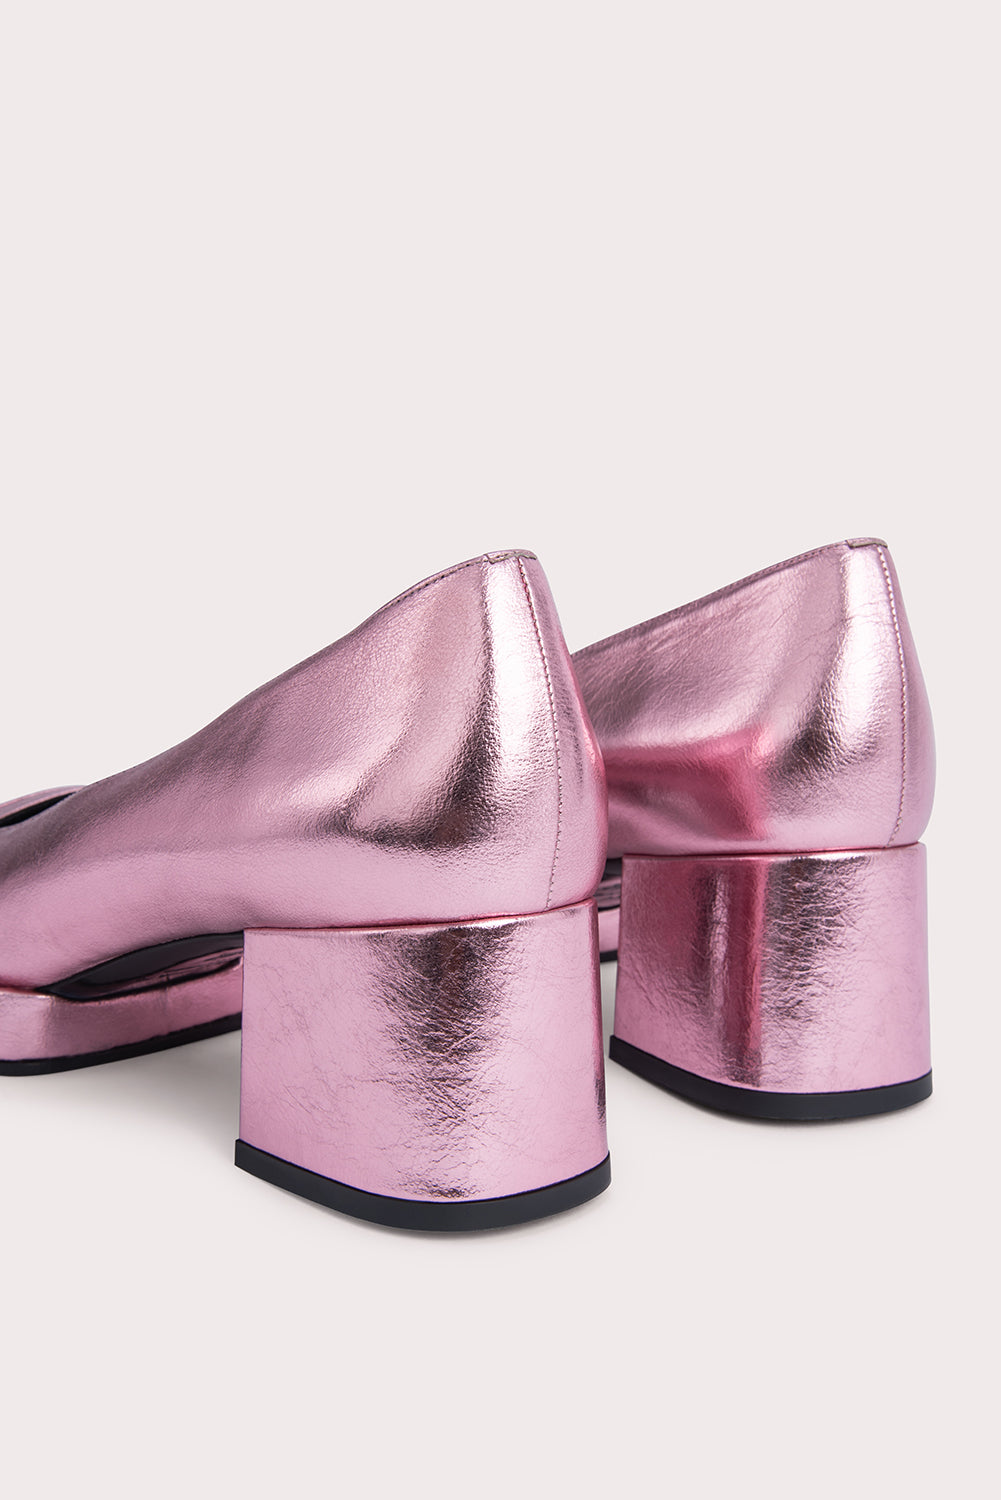 Cute Metallic Heels - High Heel Sandals - Pink Strap Heels - Lulus